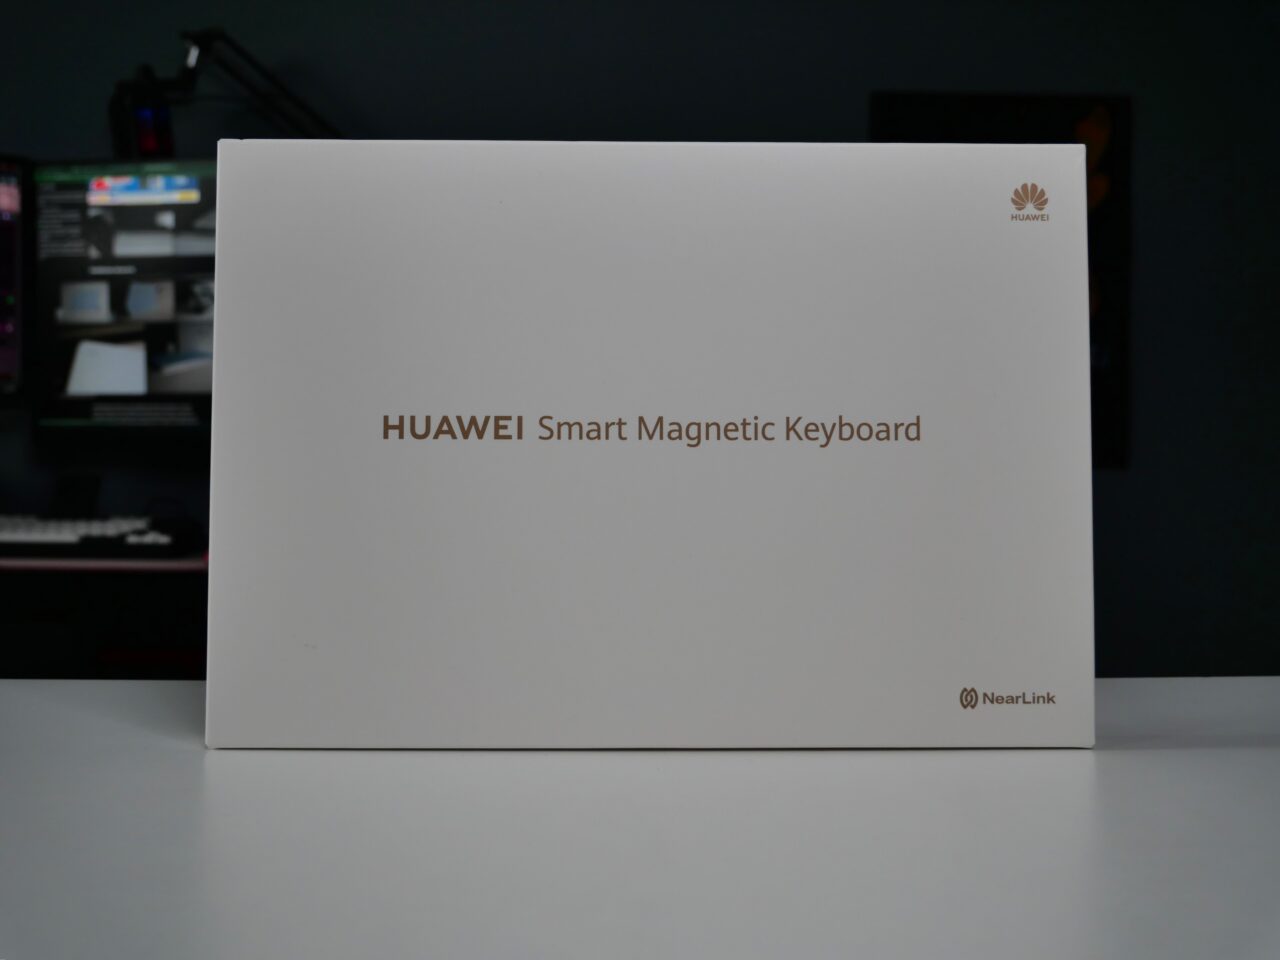 Białe pudełko z napisem "HUAWEI Smart Magnetic Keyboard" i logo Huawei.